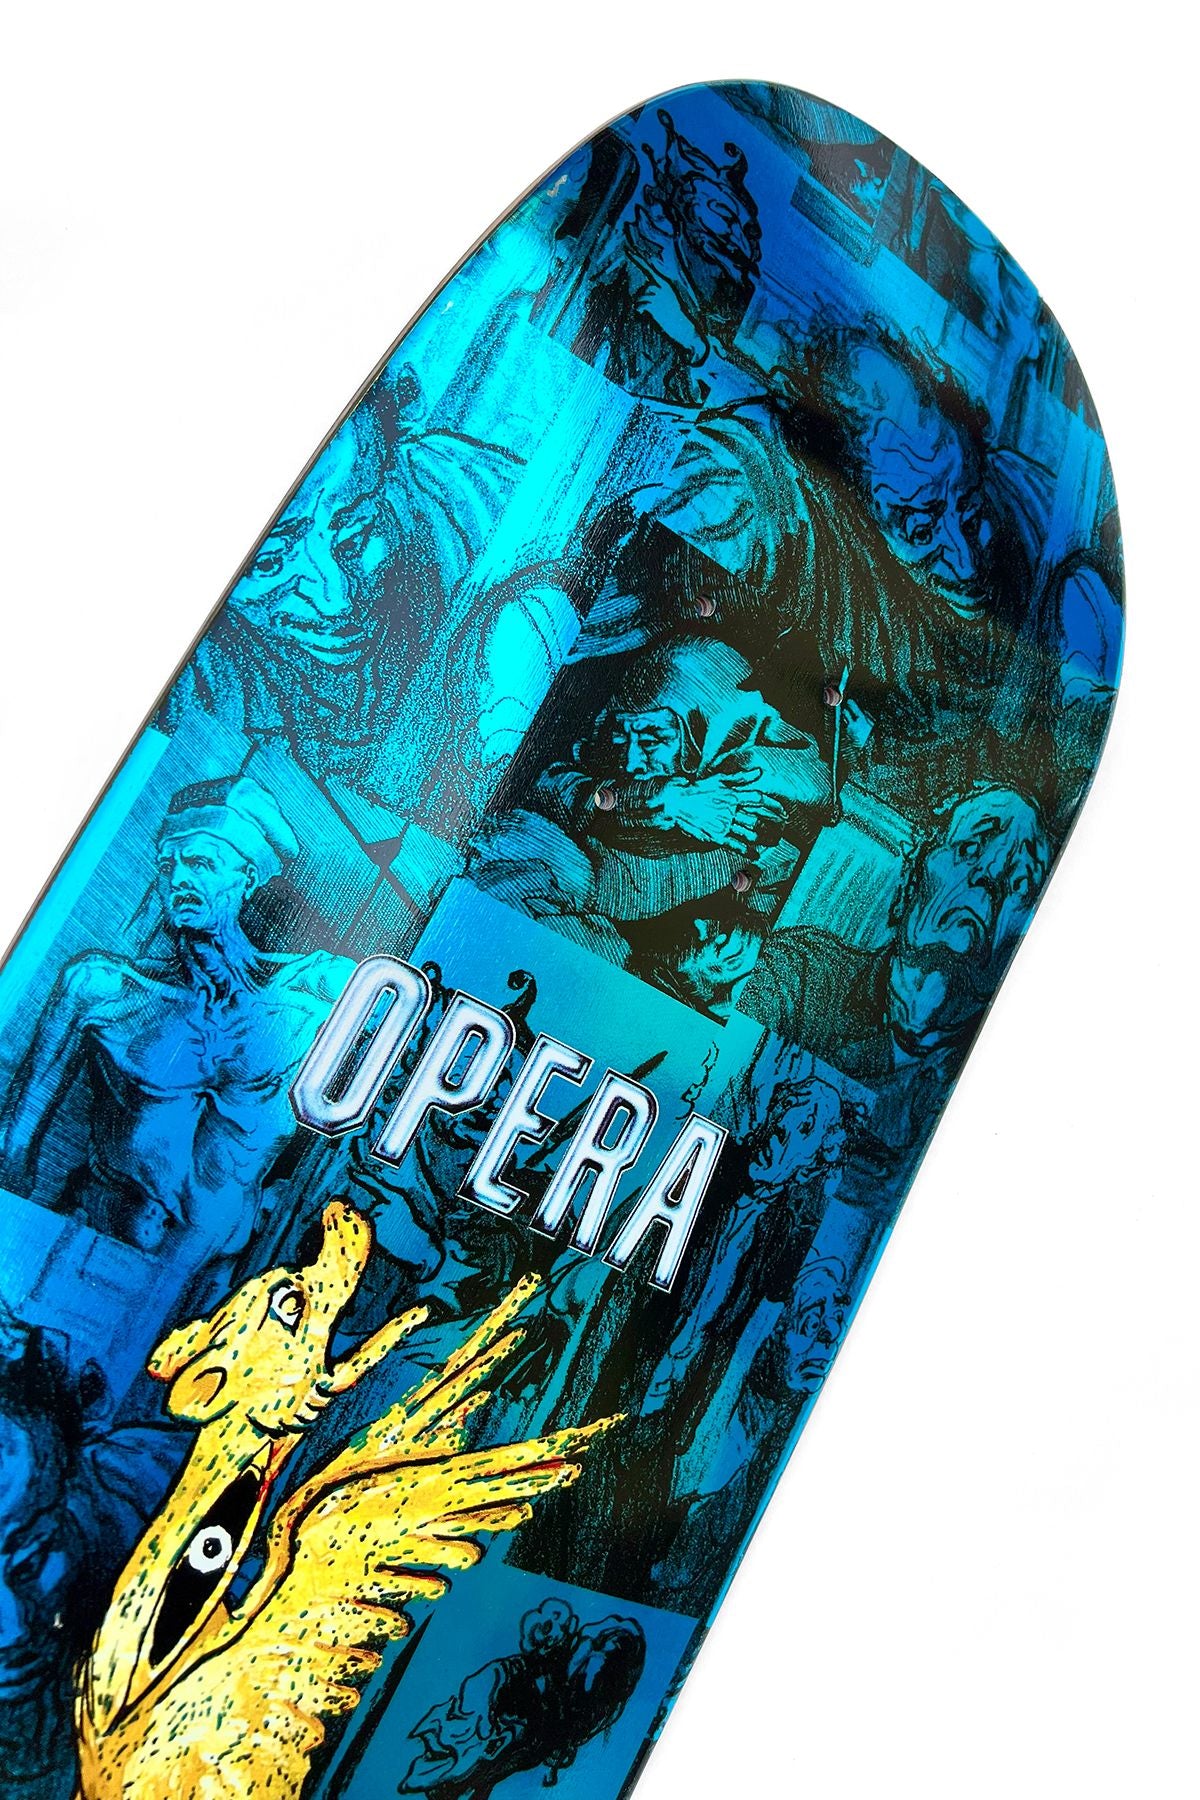 Opera Dragon Ex7 Skateboard Deck - 9.125"